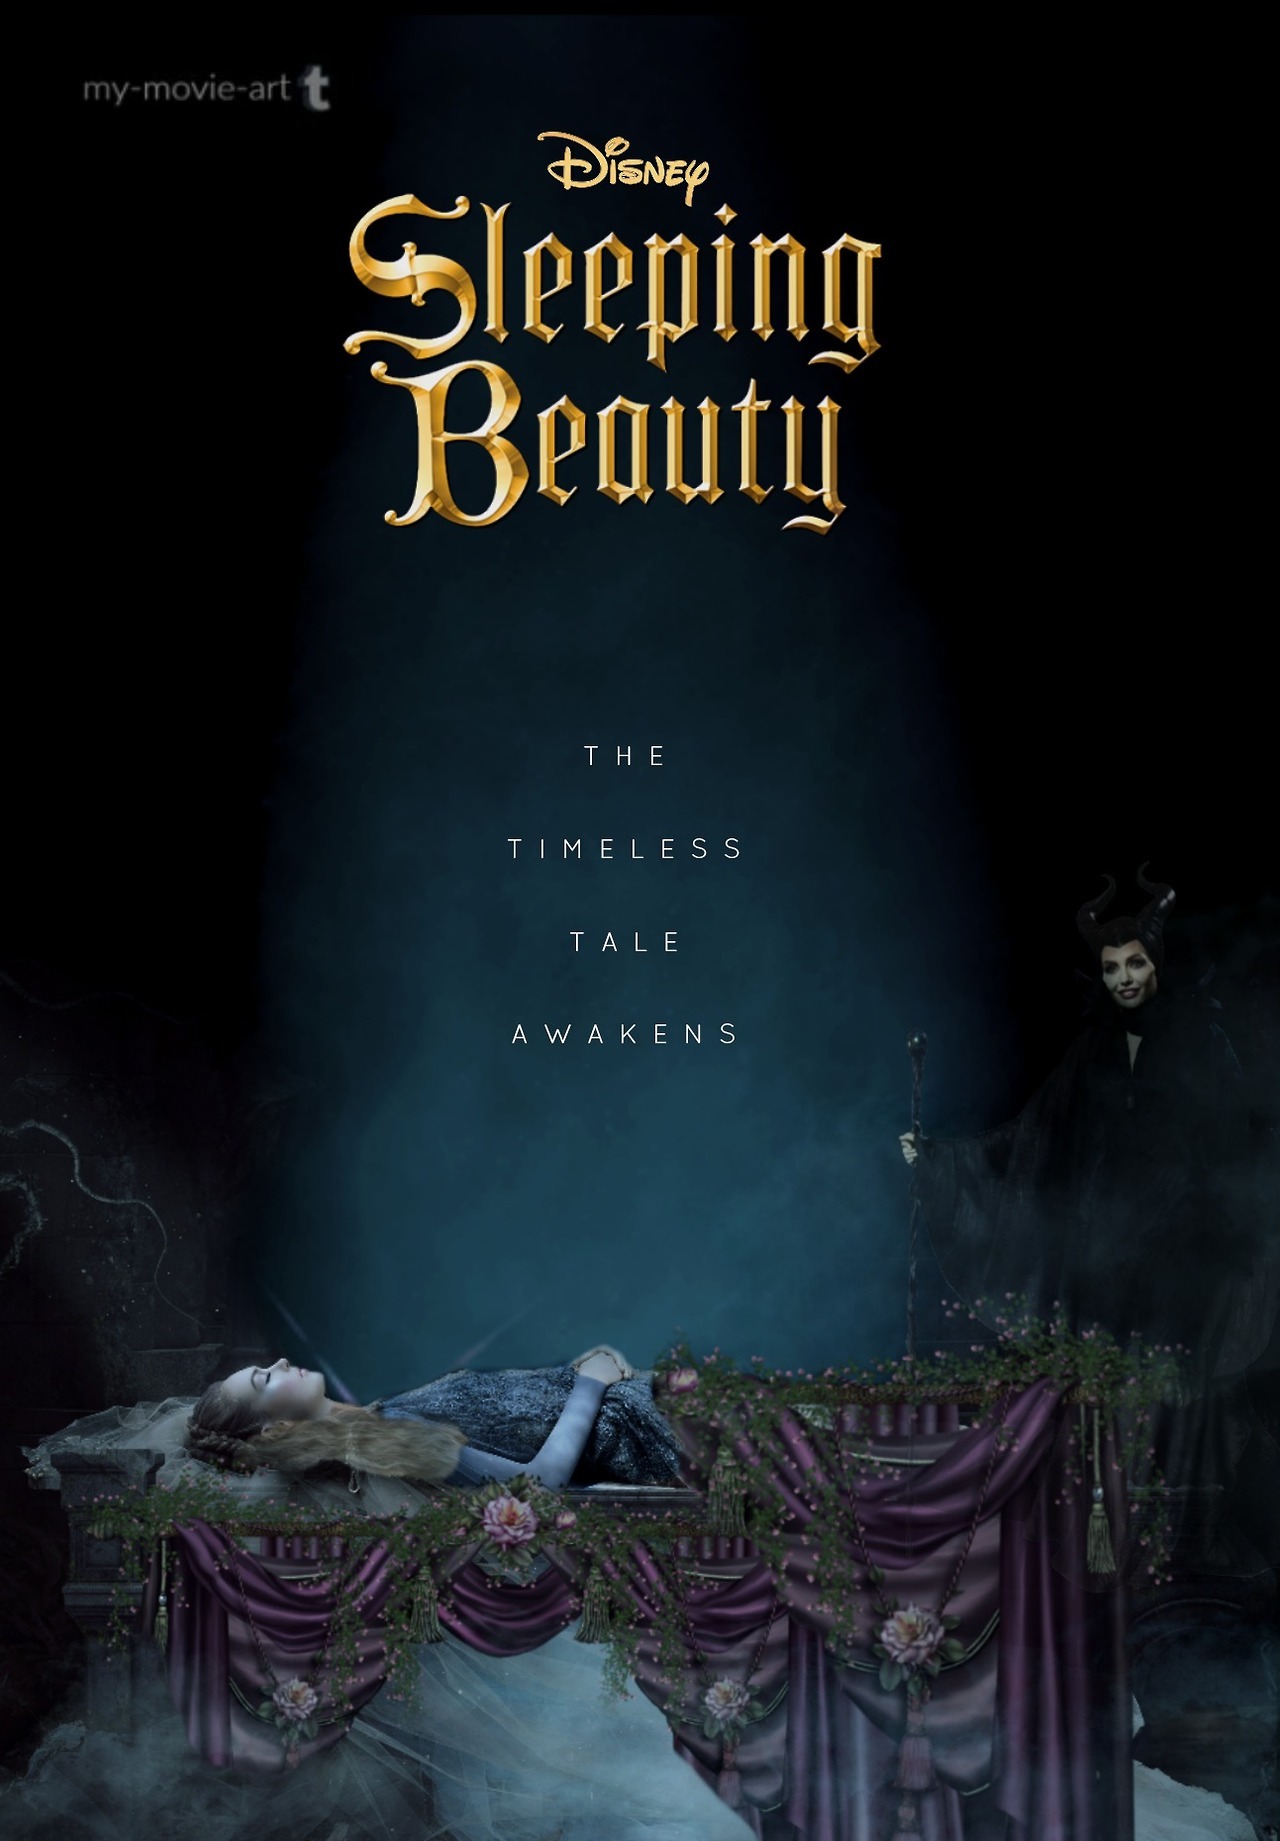 Artwork/Edits of Movie Stuff — Disney’s Live Action Sleeping Beauty